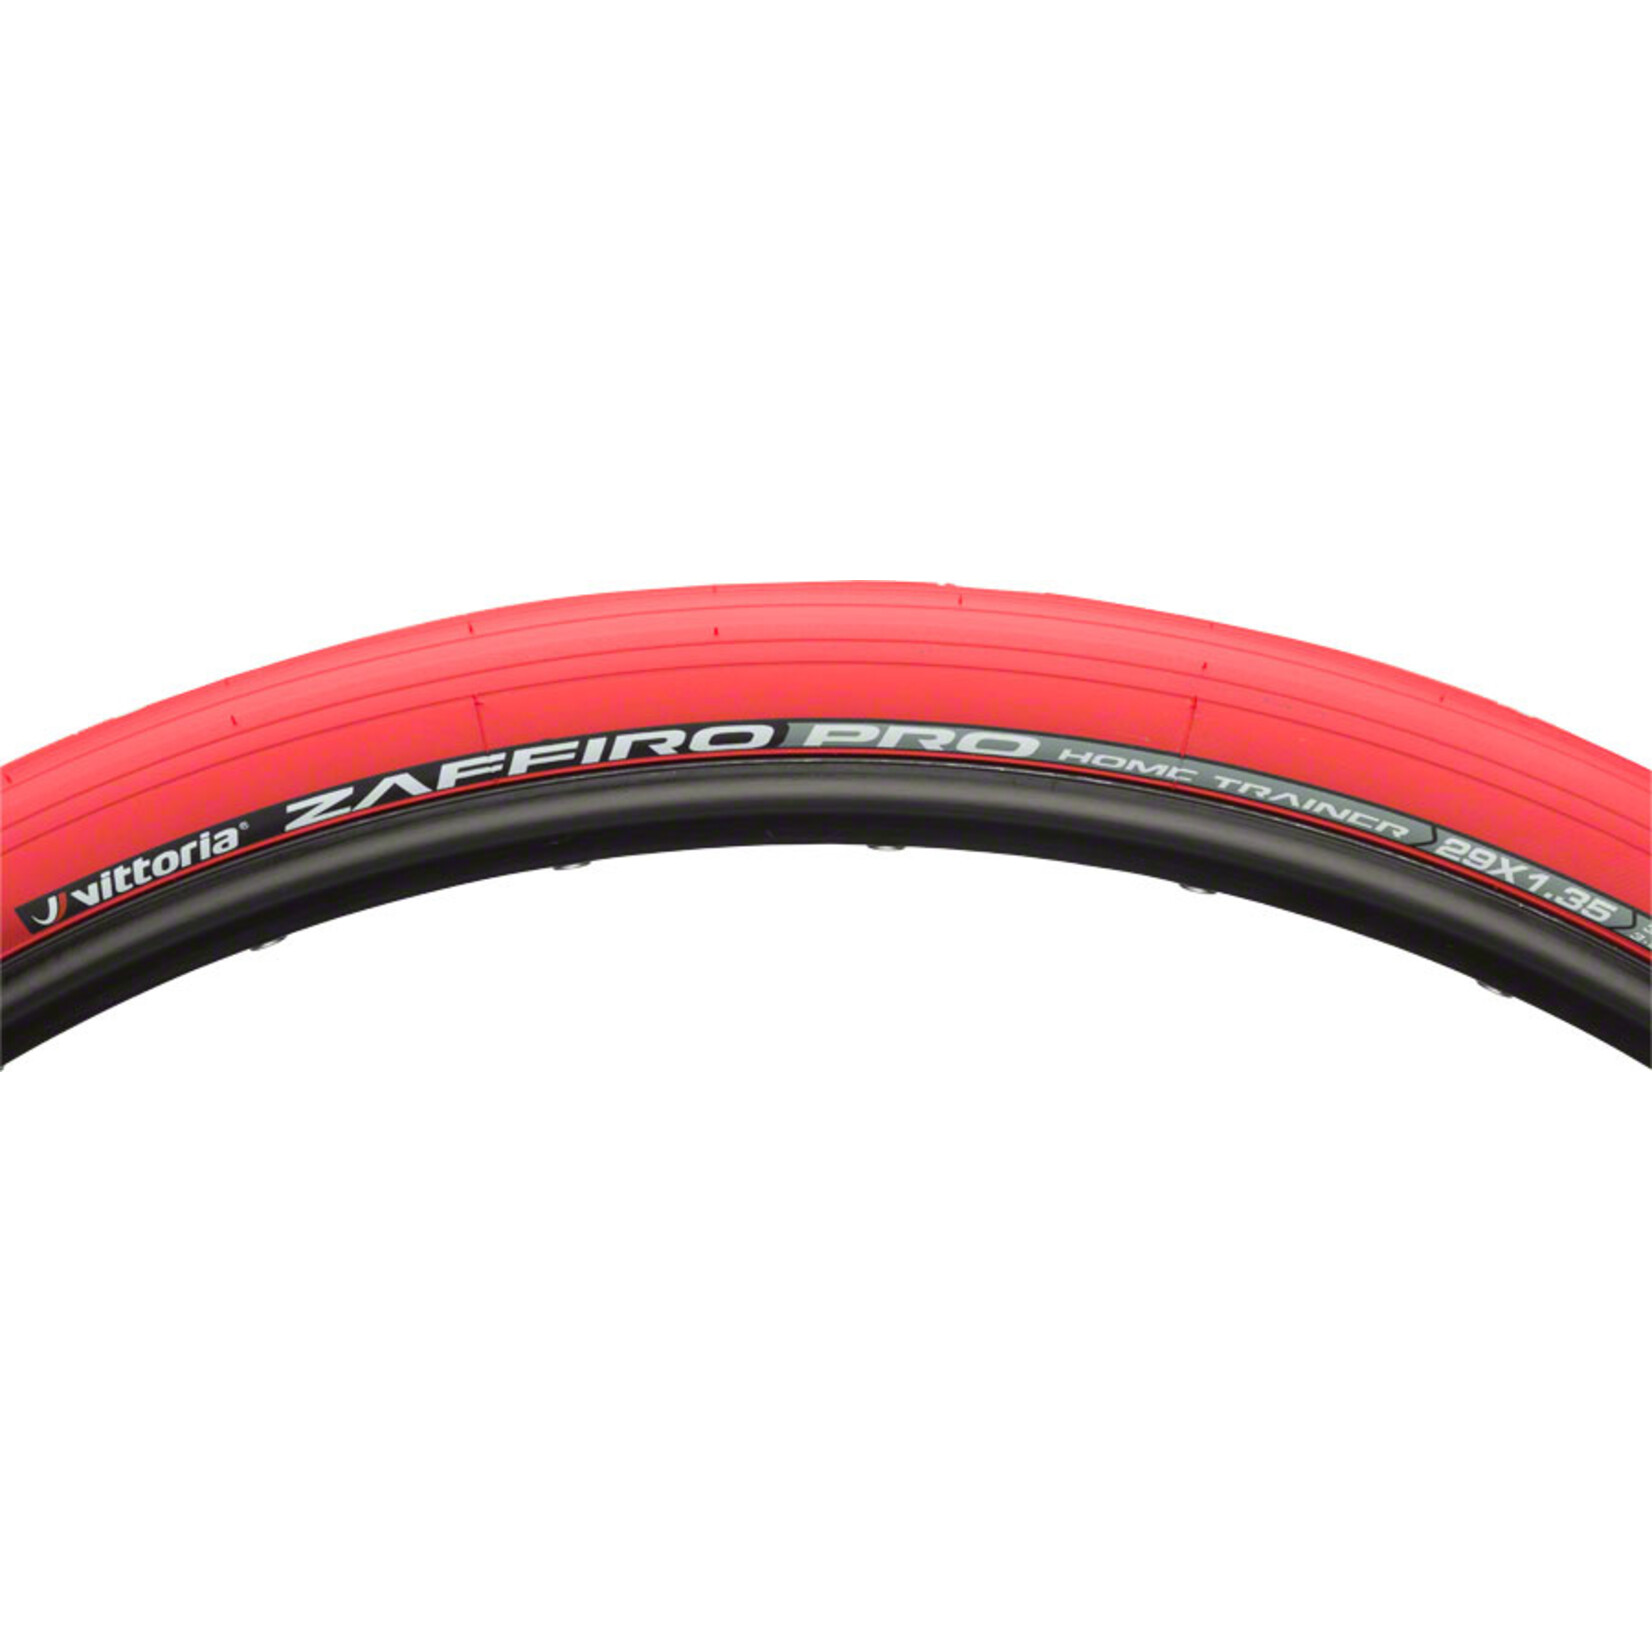 Vittoria Zaffiro Pro Home Trainer Tire: Folding Clincher, 29x1.35, Red